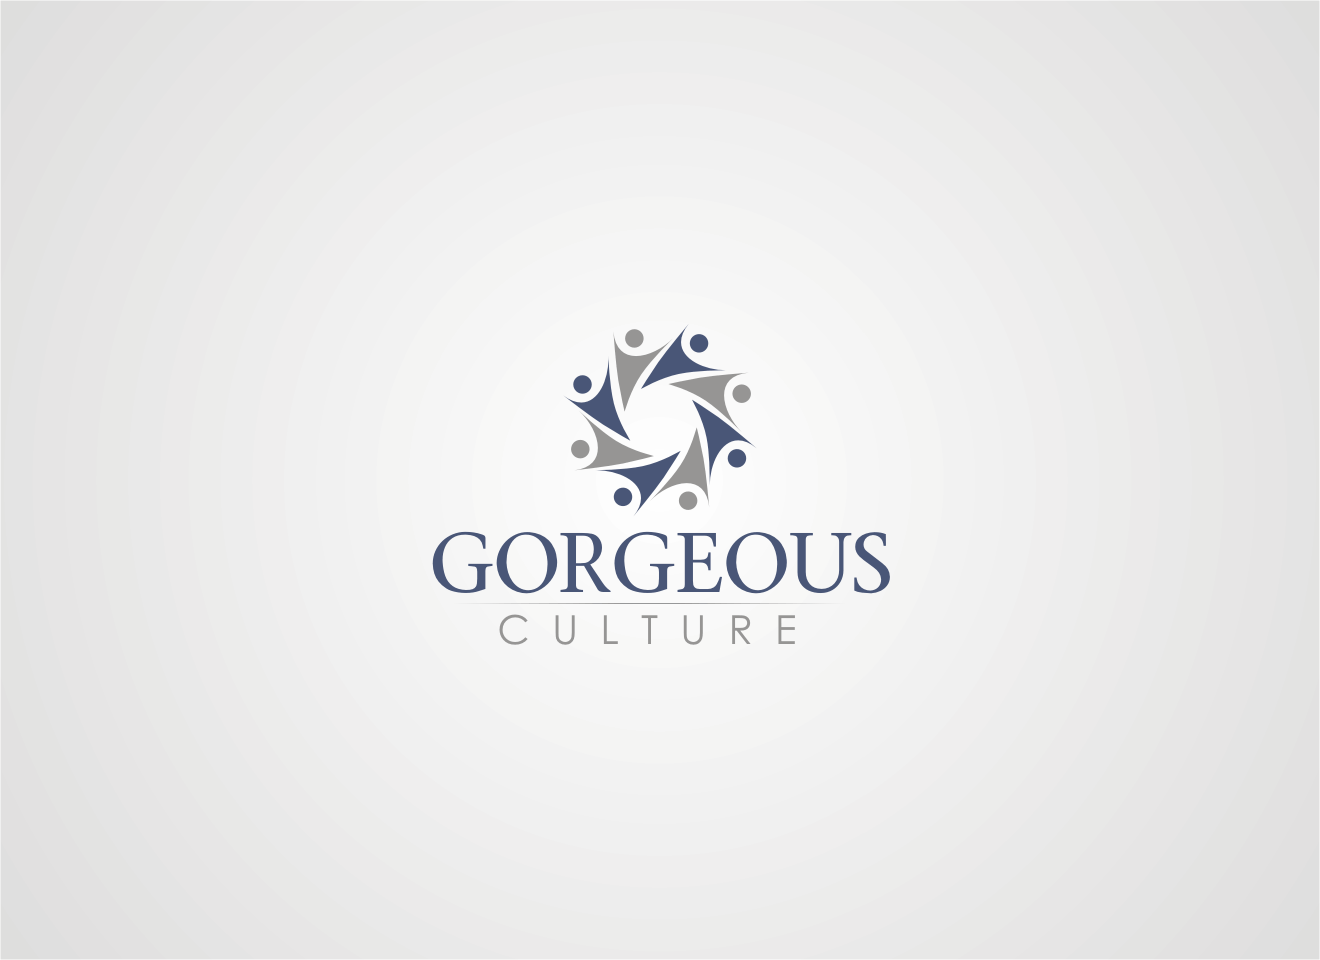 Gorgeous Logo - Gorgeous Culture Logo Design | 110Designs